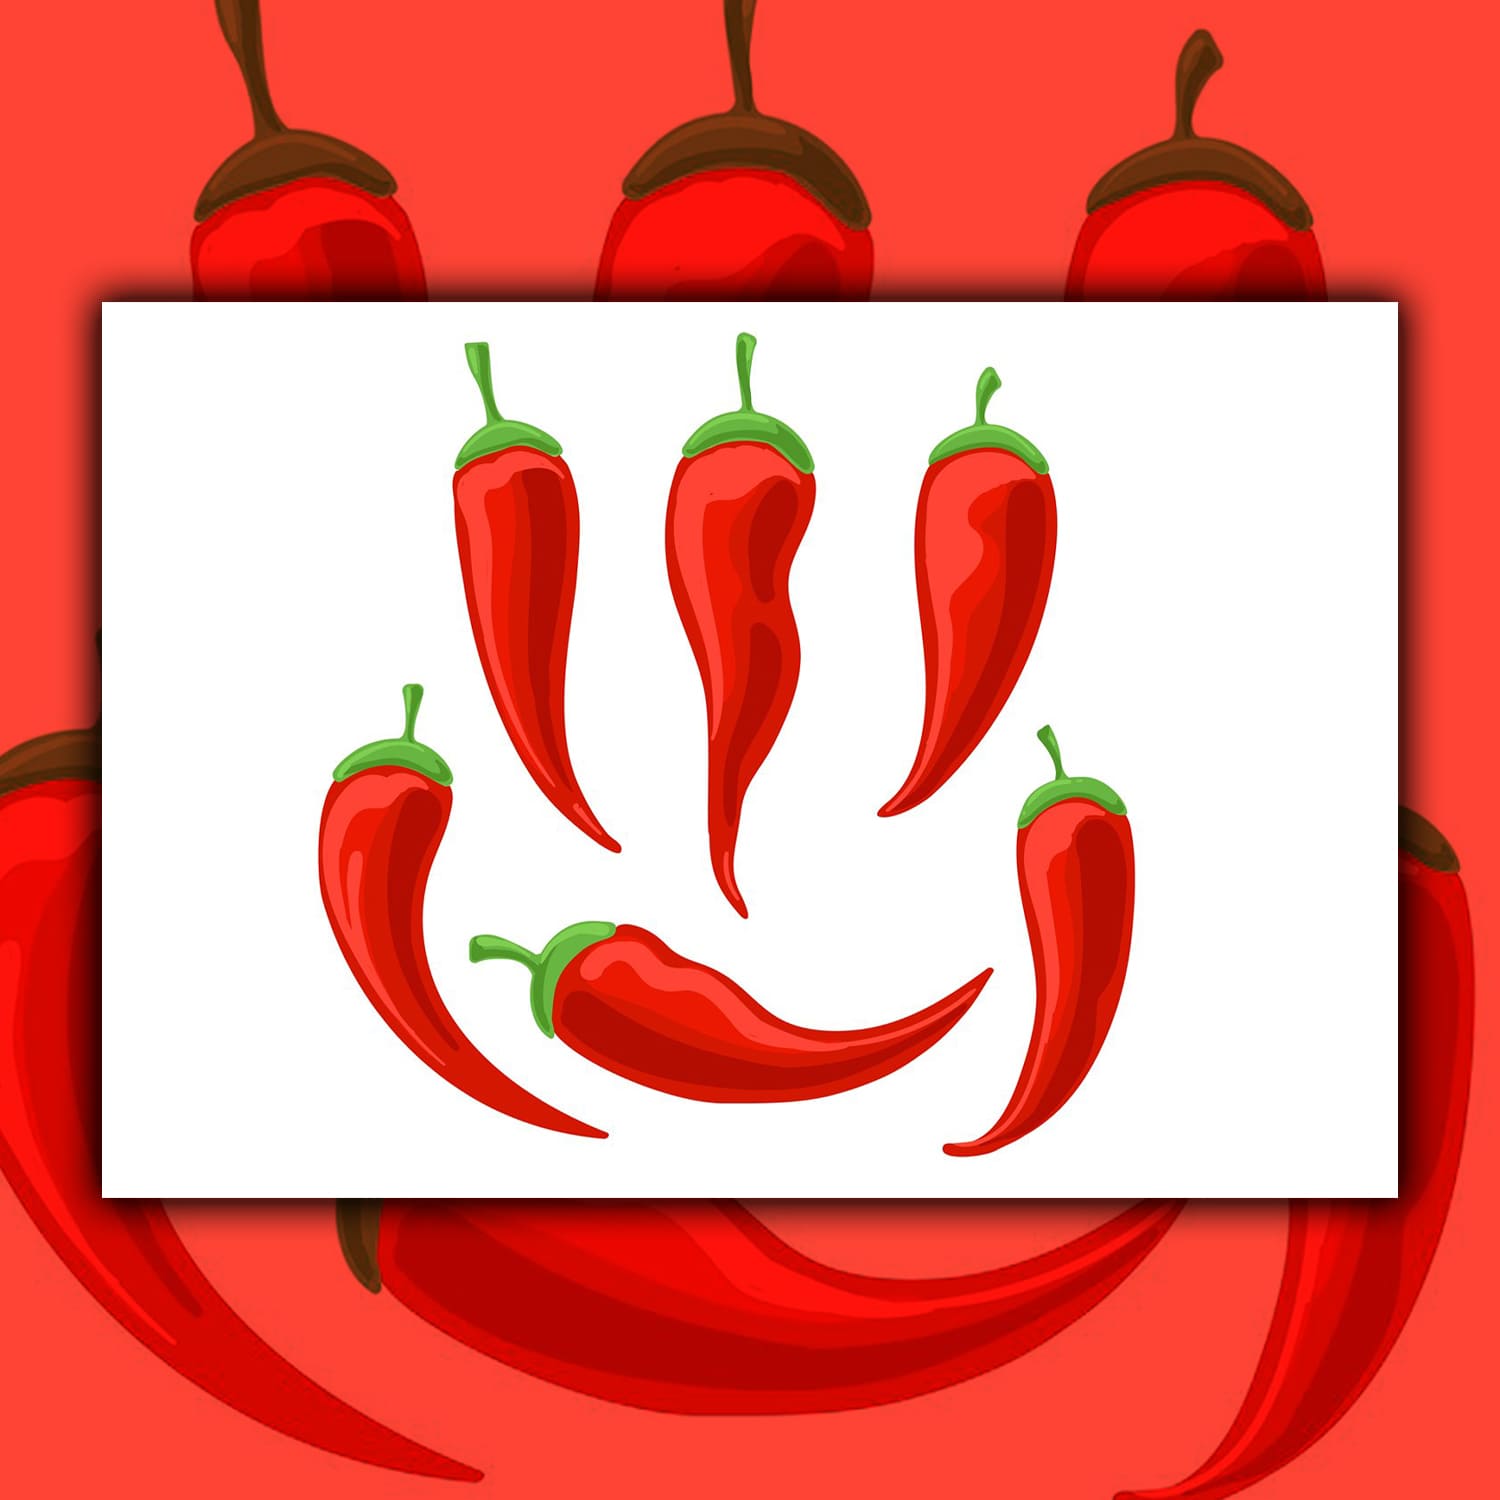 Chili pepper icons set.